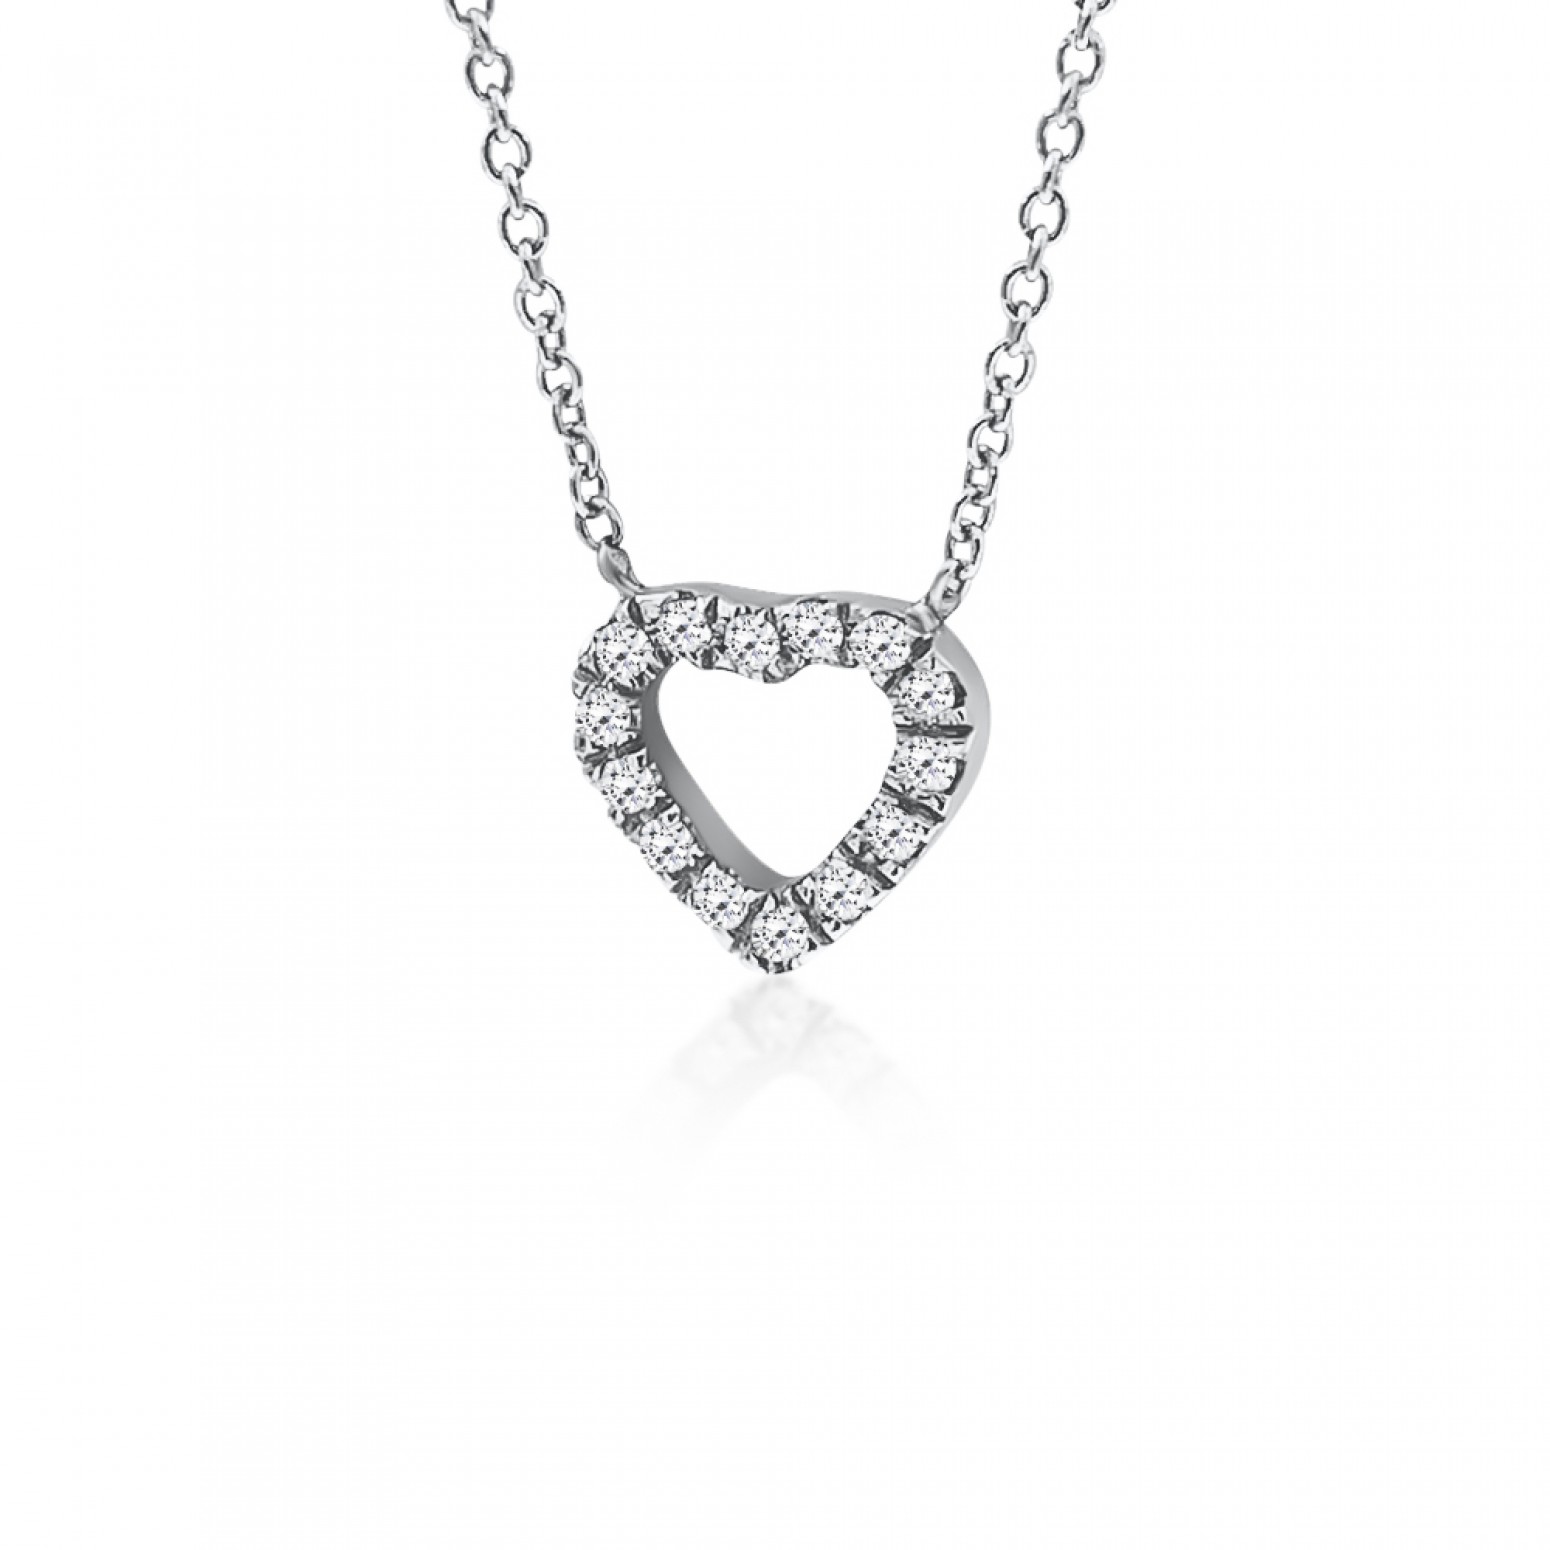 Heart necklace, Κ18 white gold with diamonds 0.05ct, VS2, H ko5075 NECKLACES Κοσμηματα - chrilia.gr